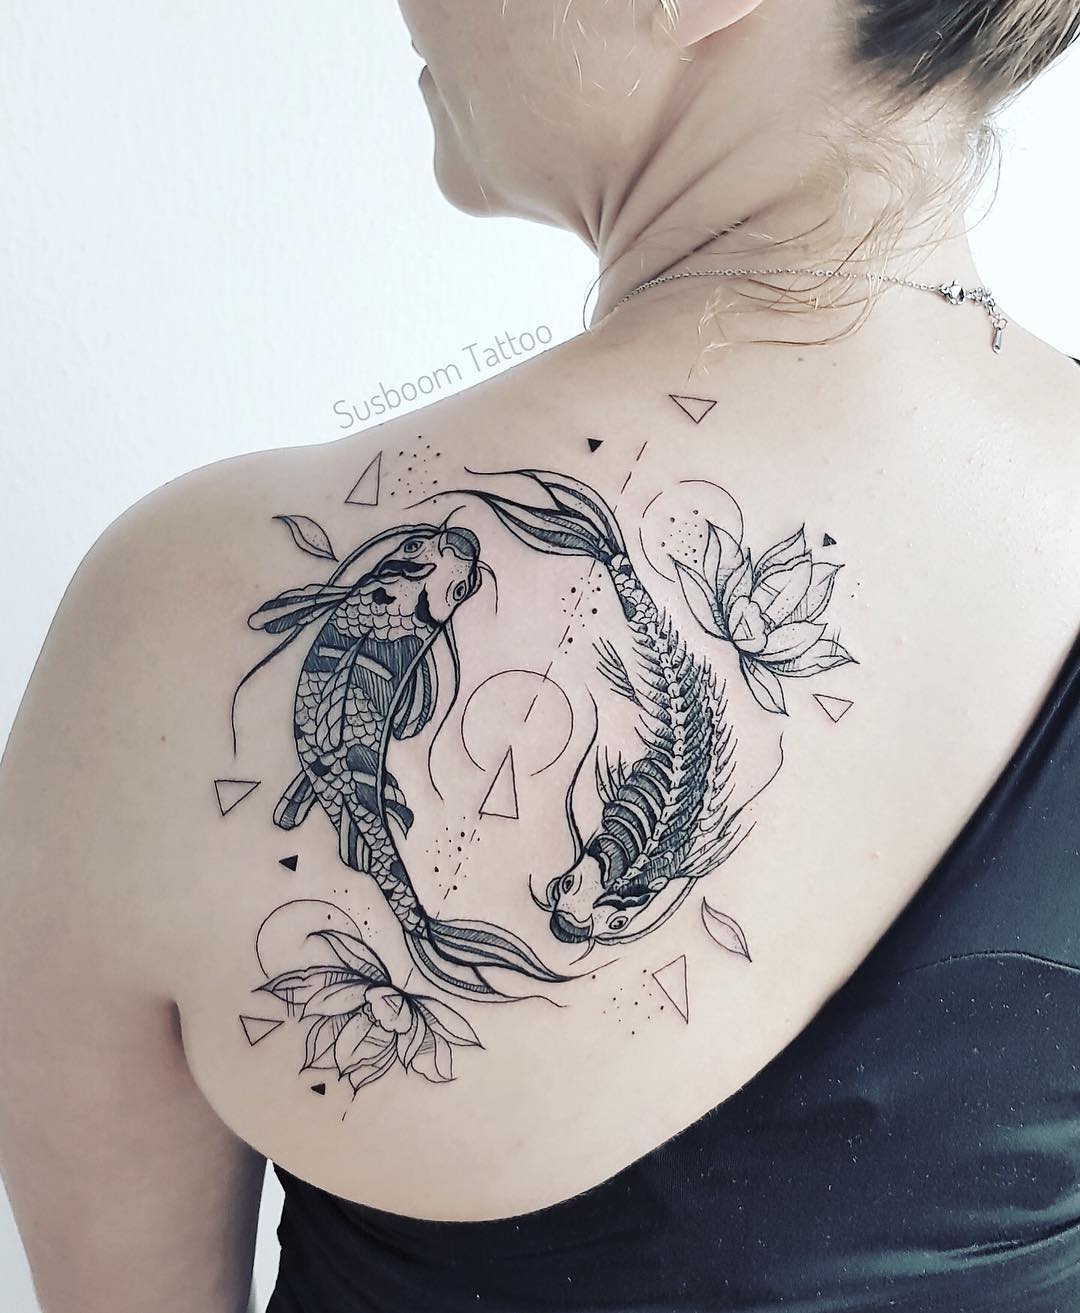 Tattoo Ideas For Women